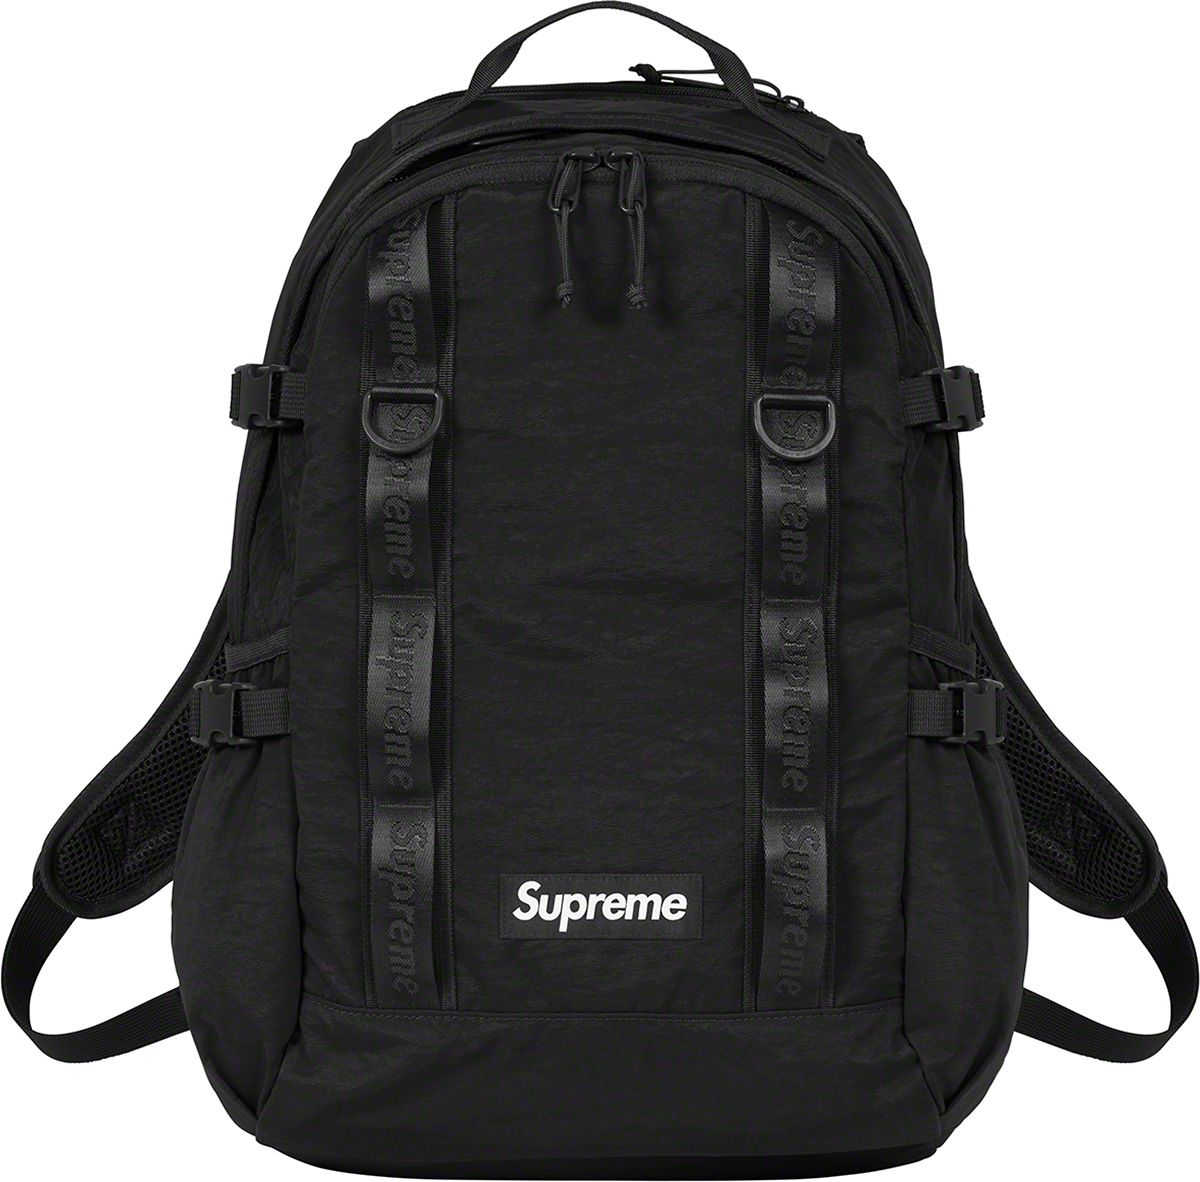 Waterproof Reflective Speckled Backpack - Supreme